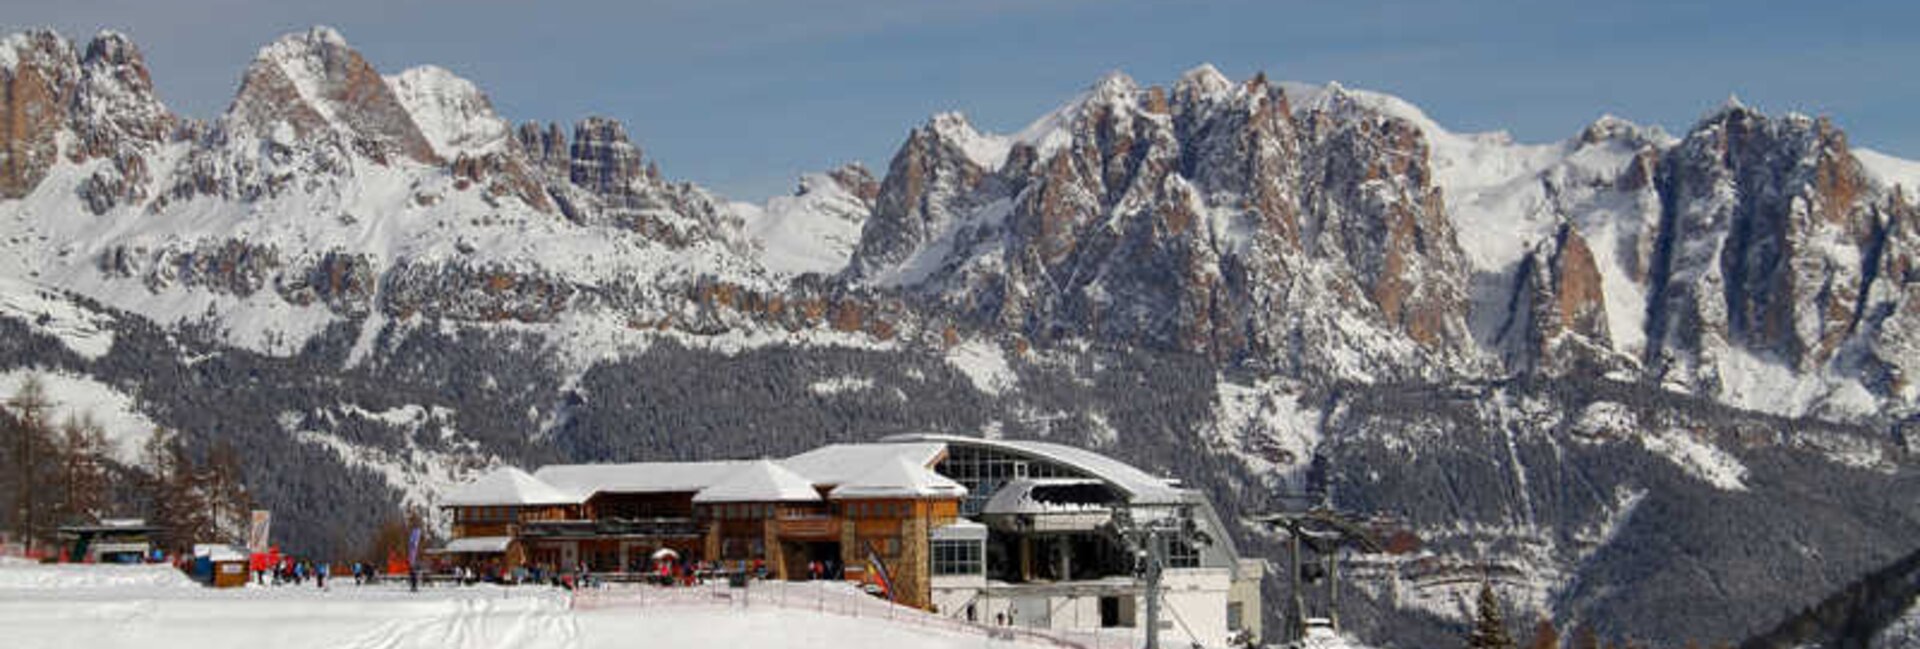 Moena ski lifts and slopes - Ski resort Alpe Lusia - Moena